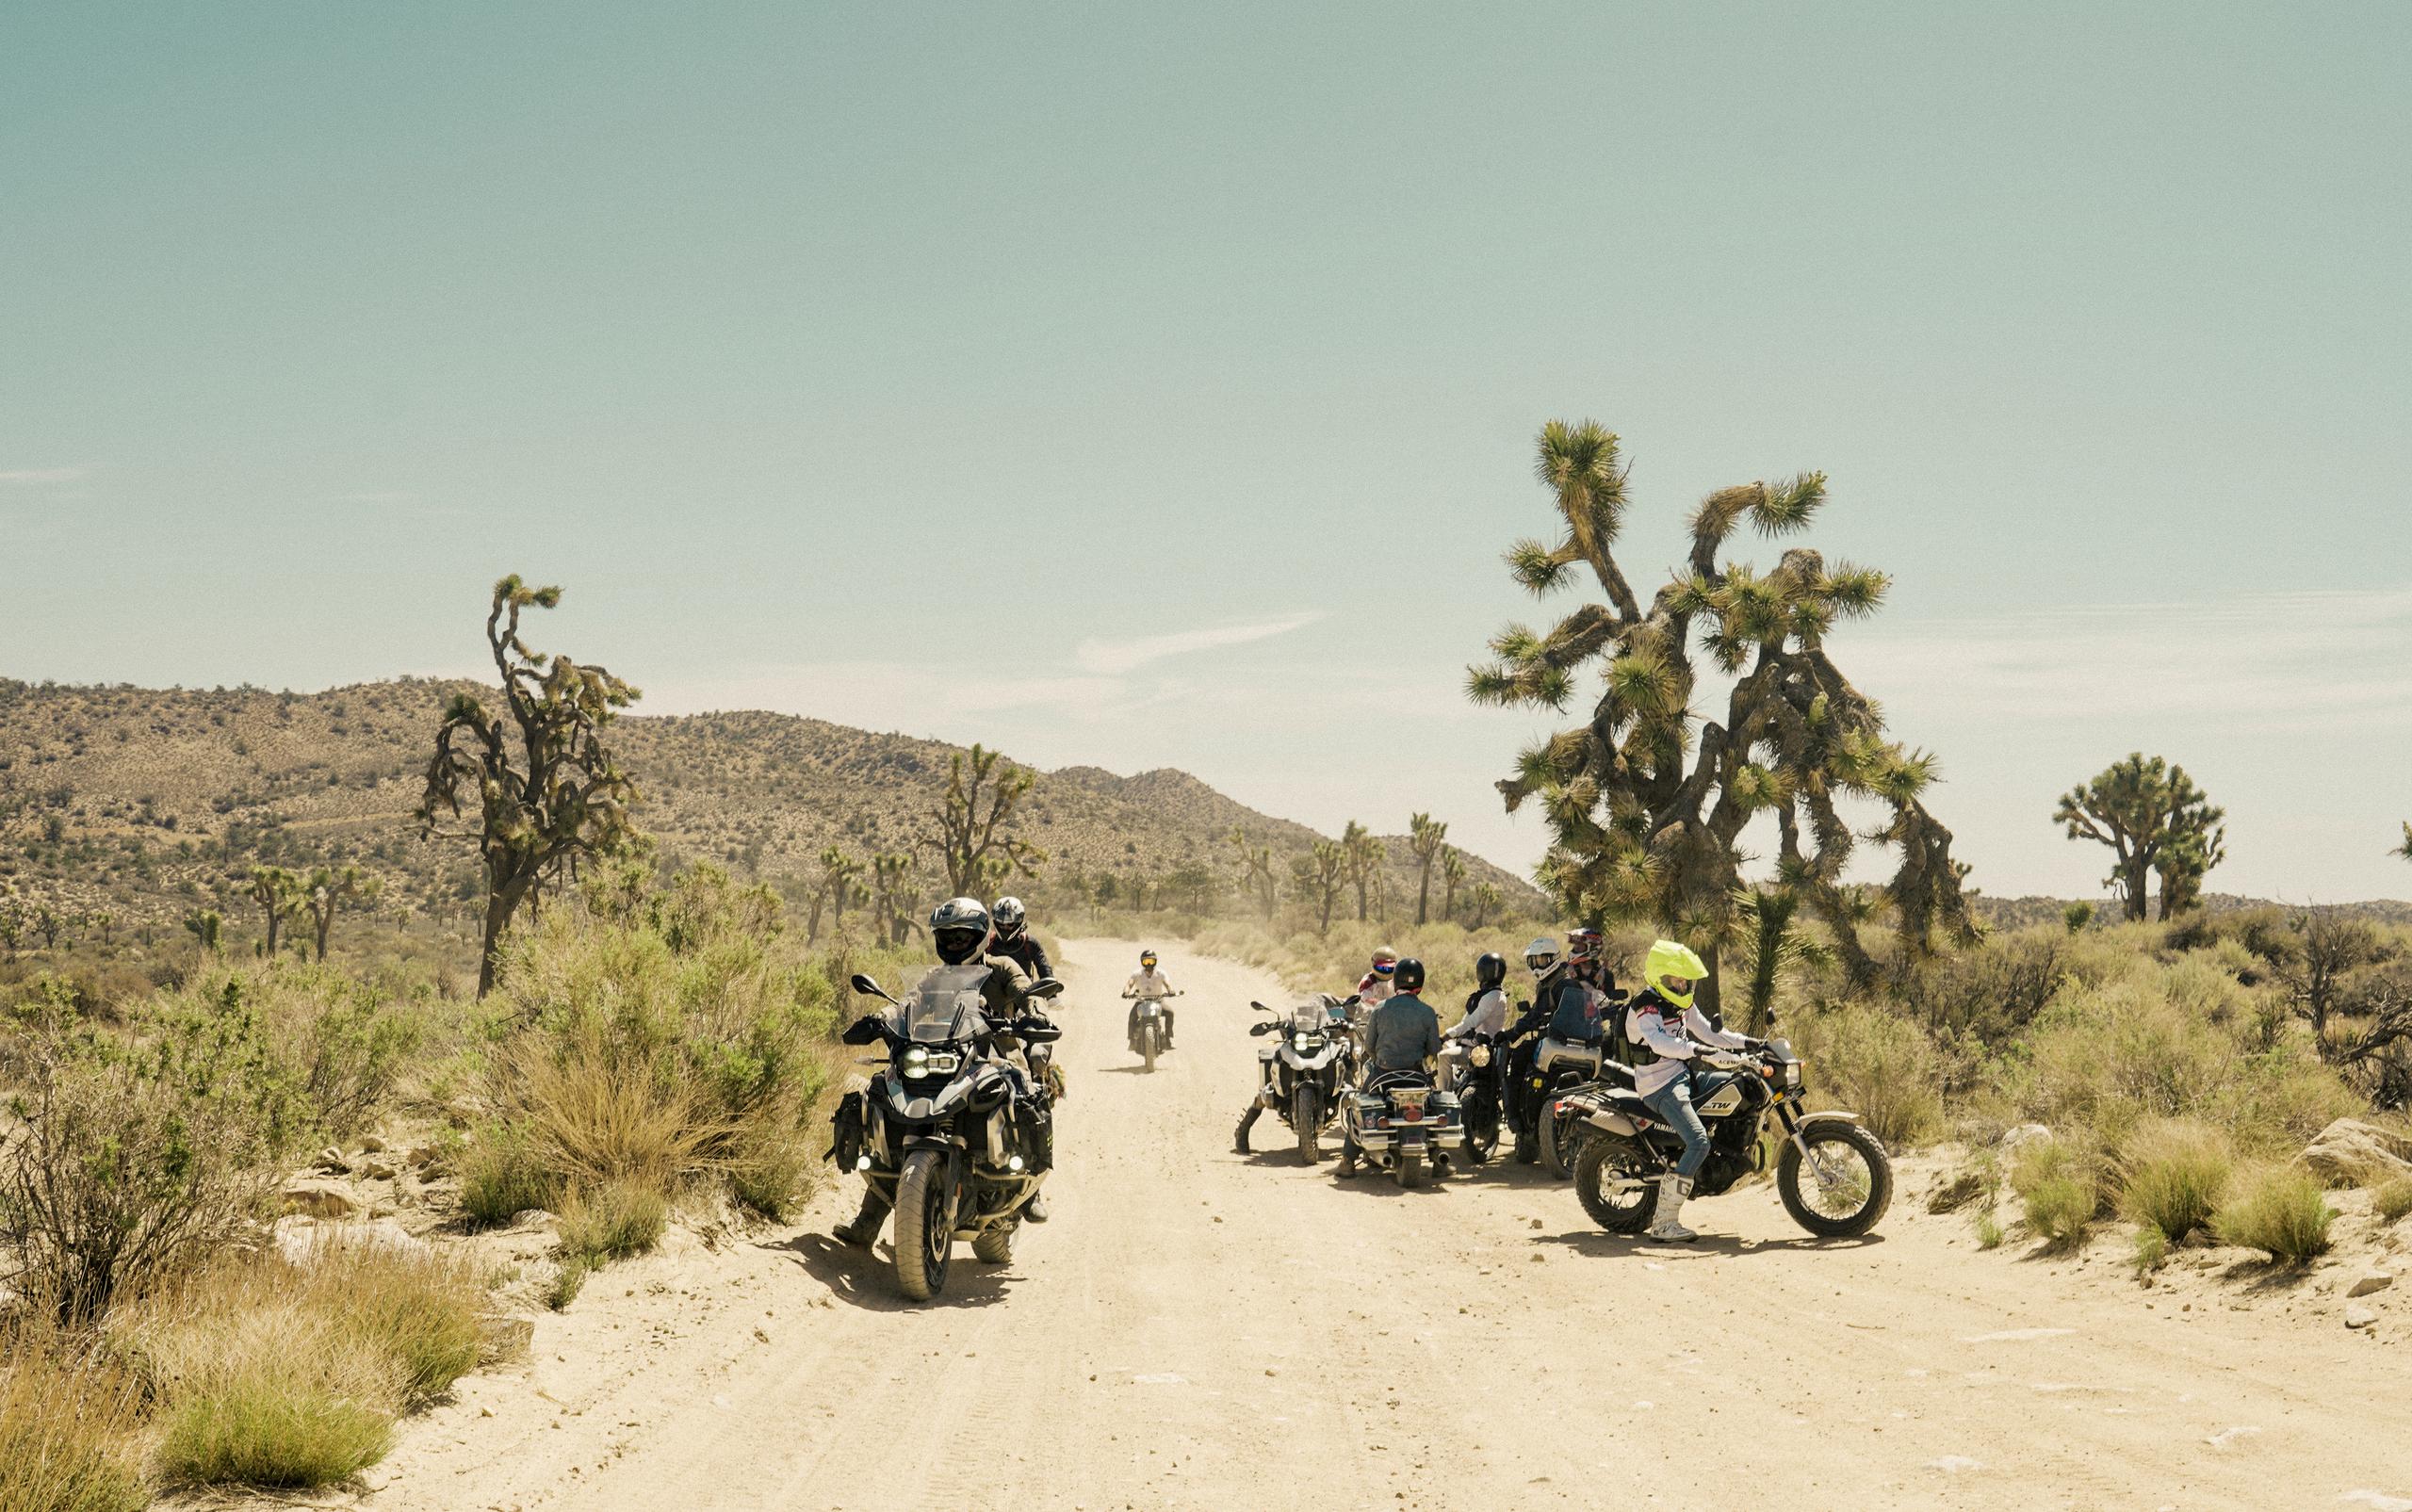 Motorcyclists on dirt path in Joshua Tree, California